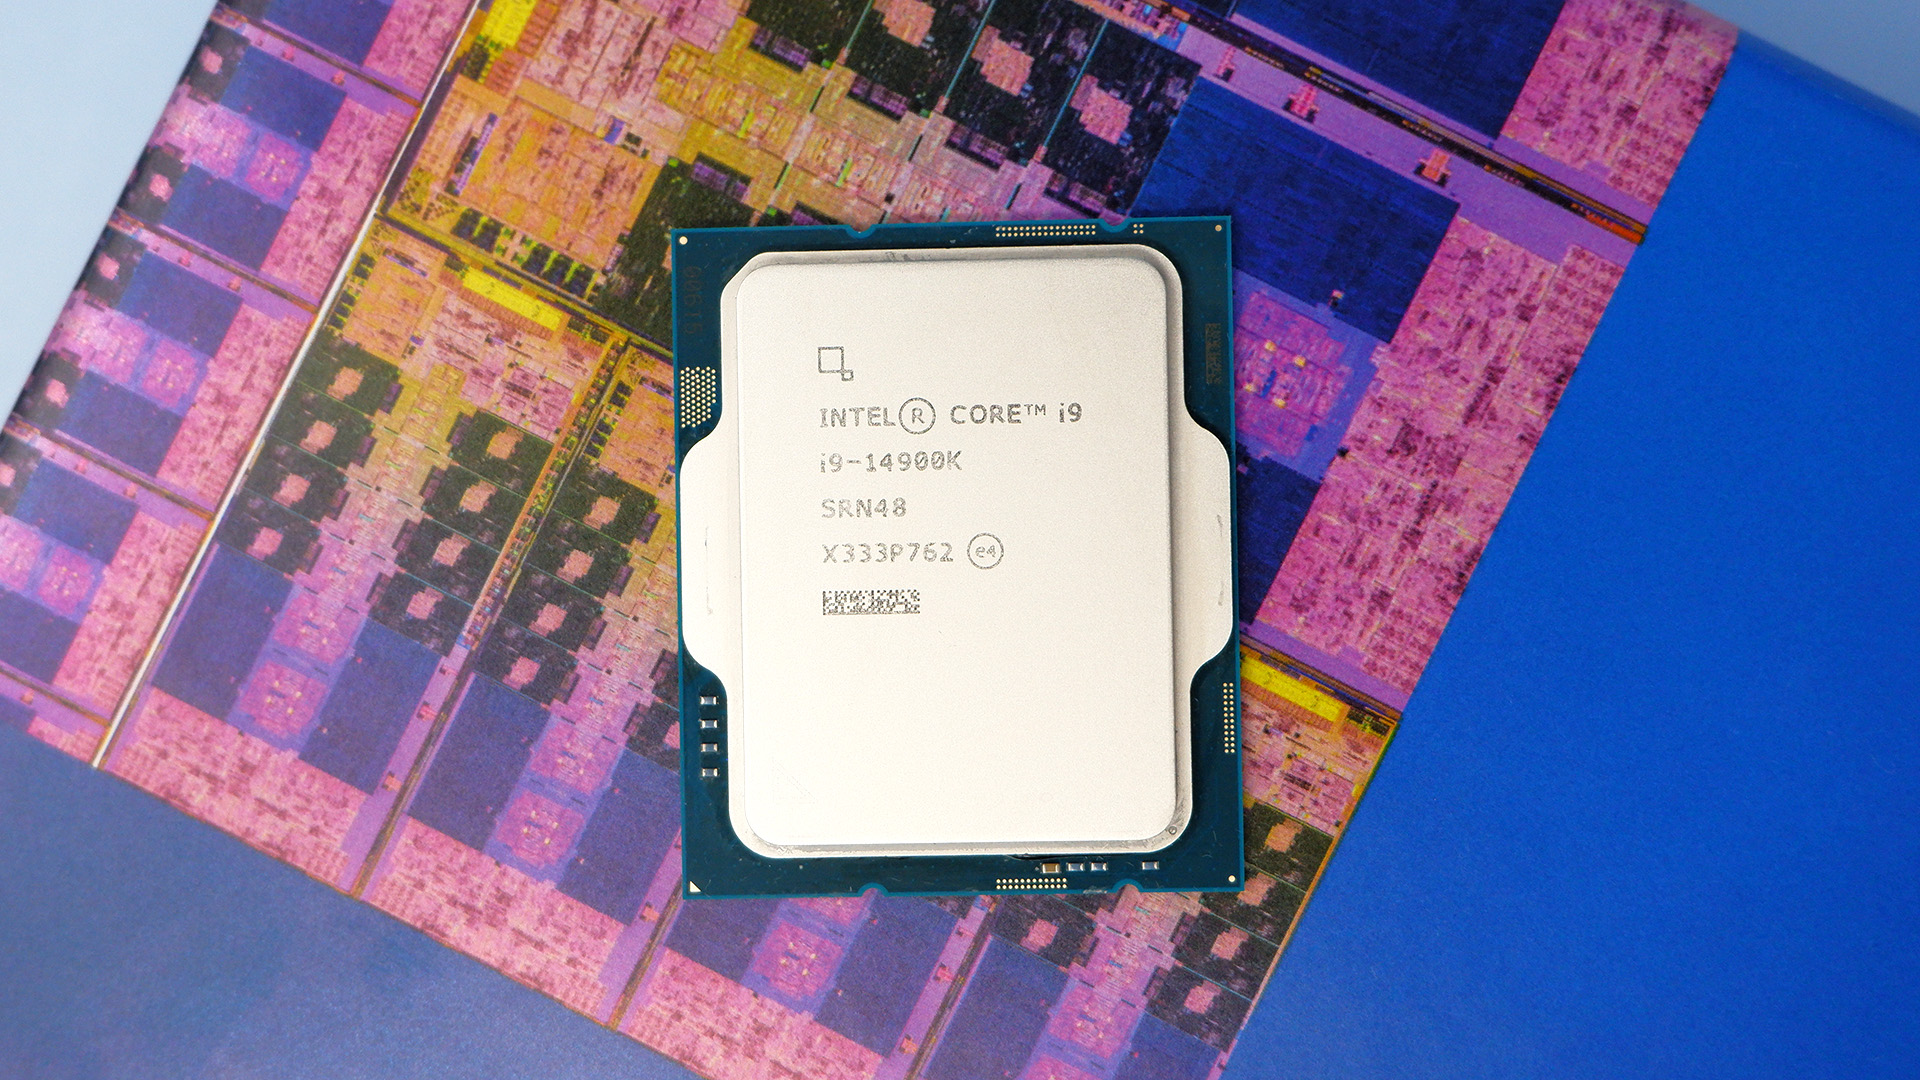 Intel Core i9-14900KF is ranked fastest single-core CPU